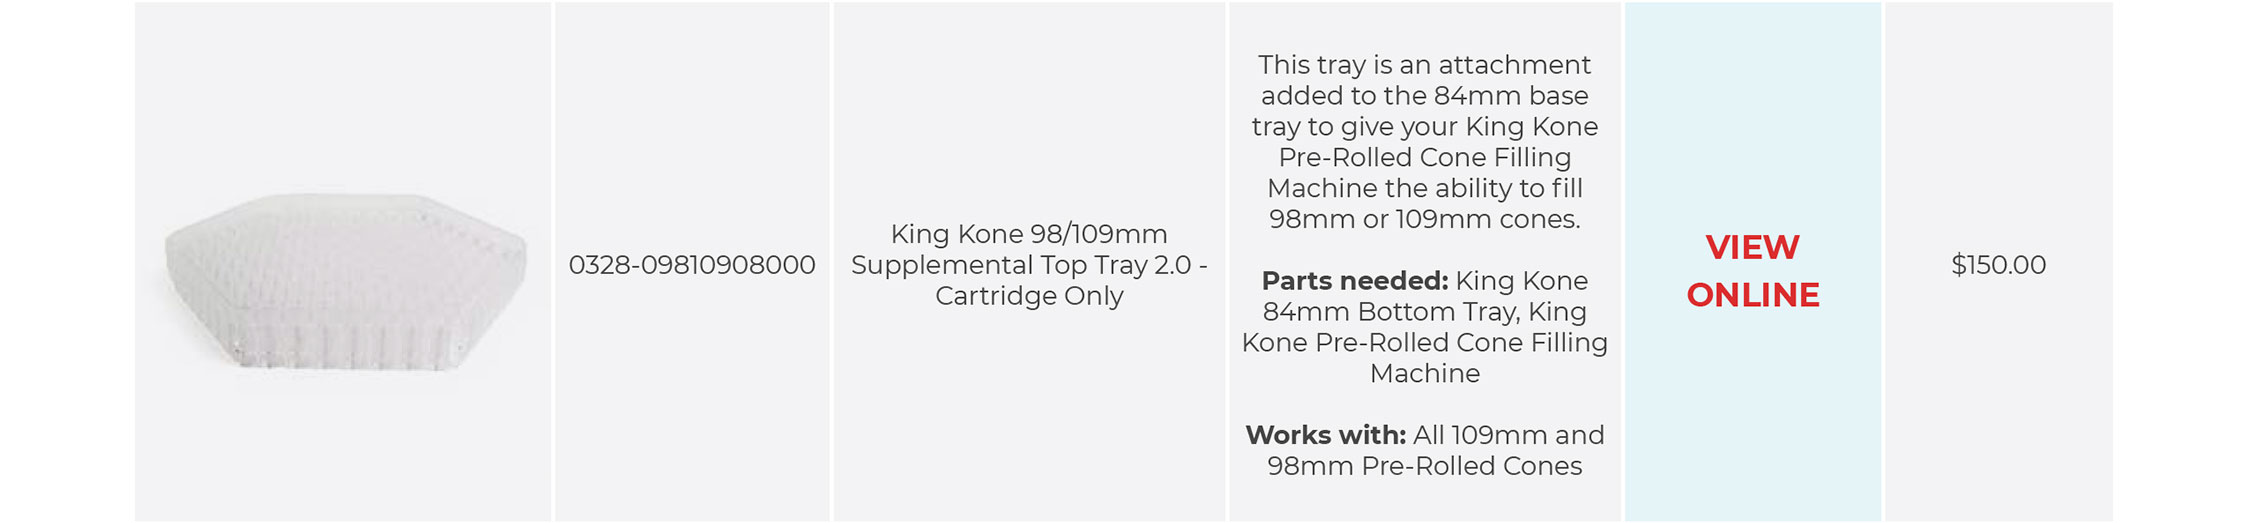 King Kone 98/109mm Supplemental Top Tray 2.0 - Cartridge Only